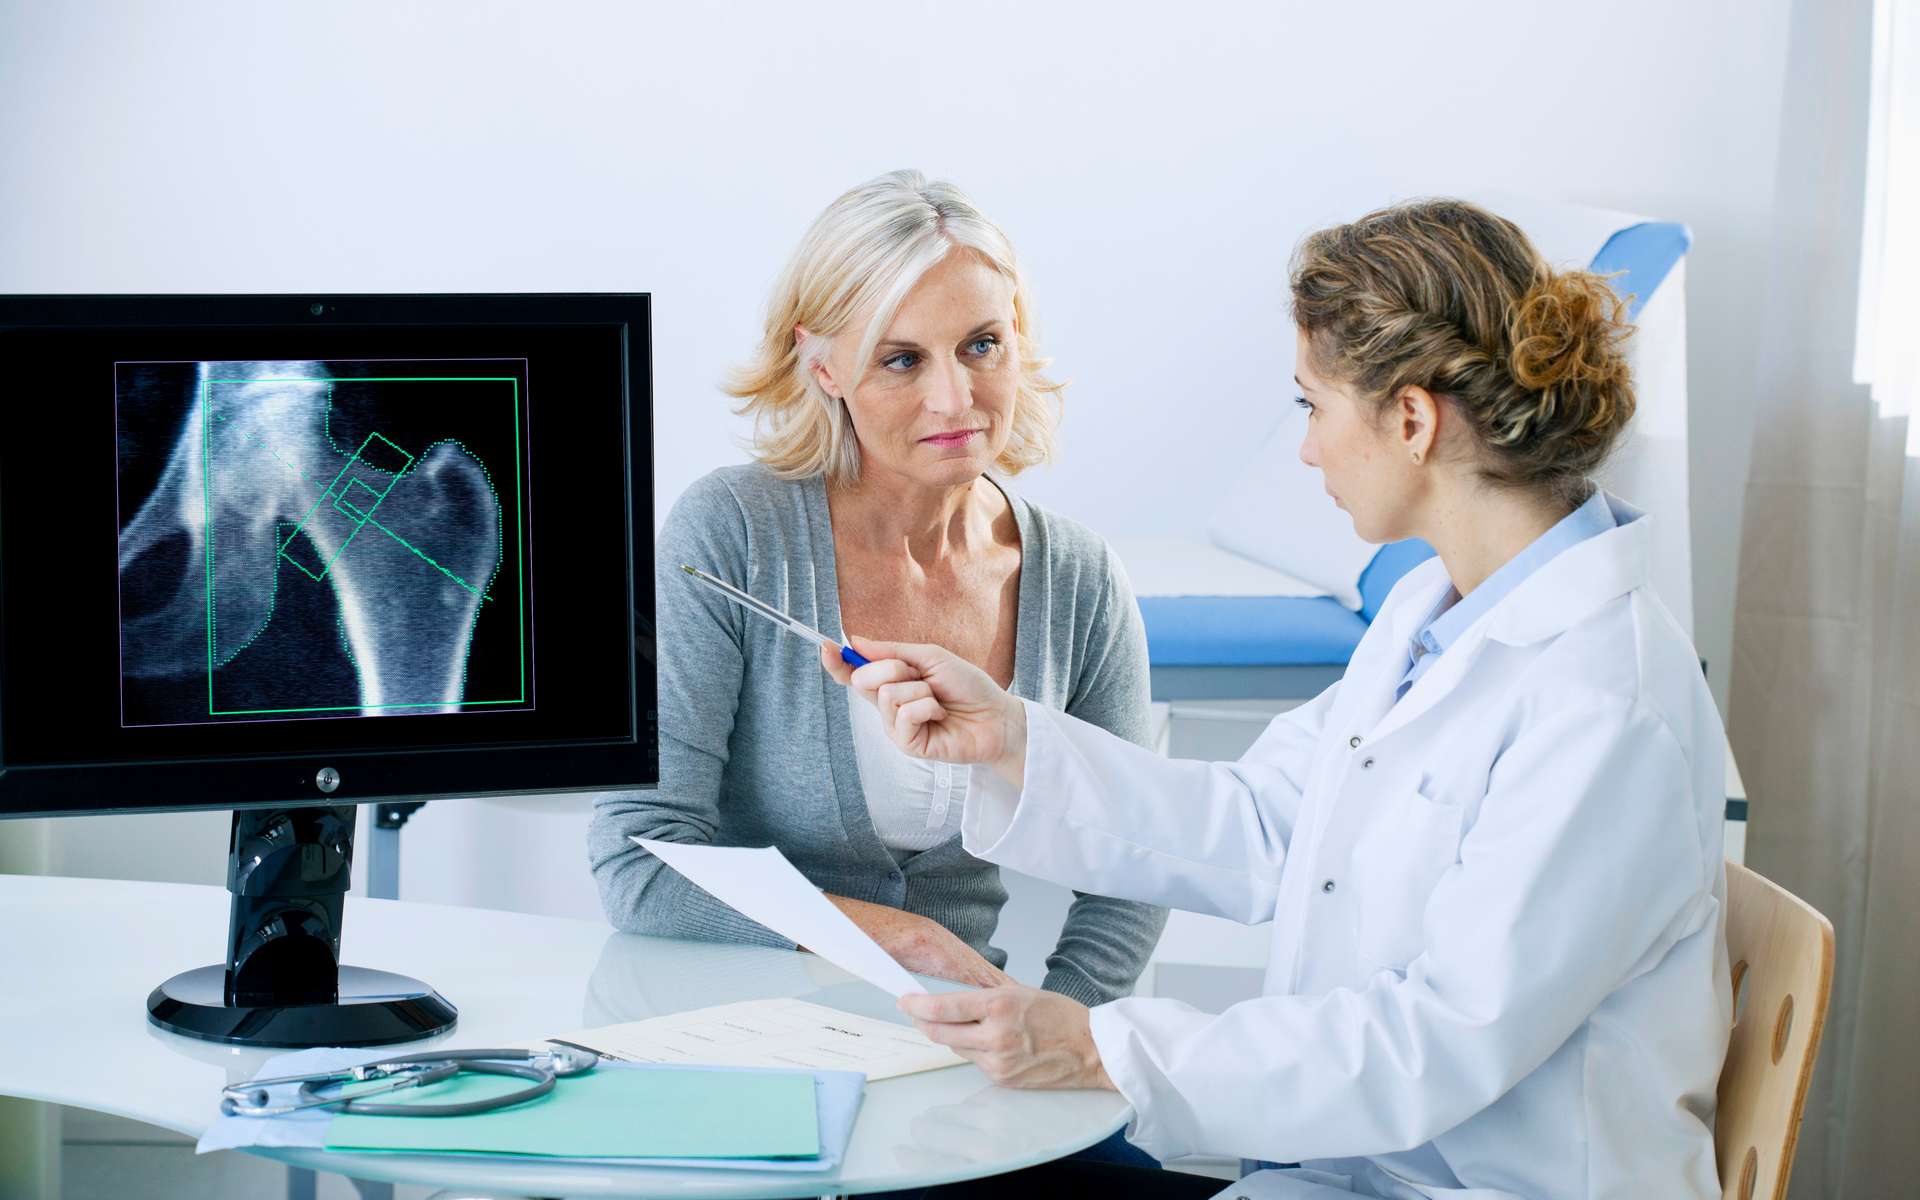 L'ostéodensitométrie est l'examen qui permet de vérifier la perte osseuse. © RFBSIP, Adobe Stock